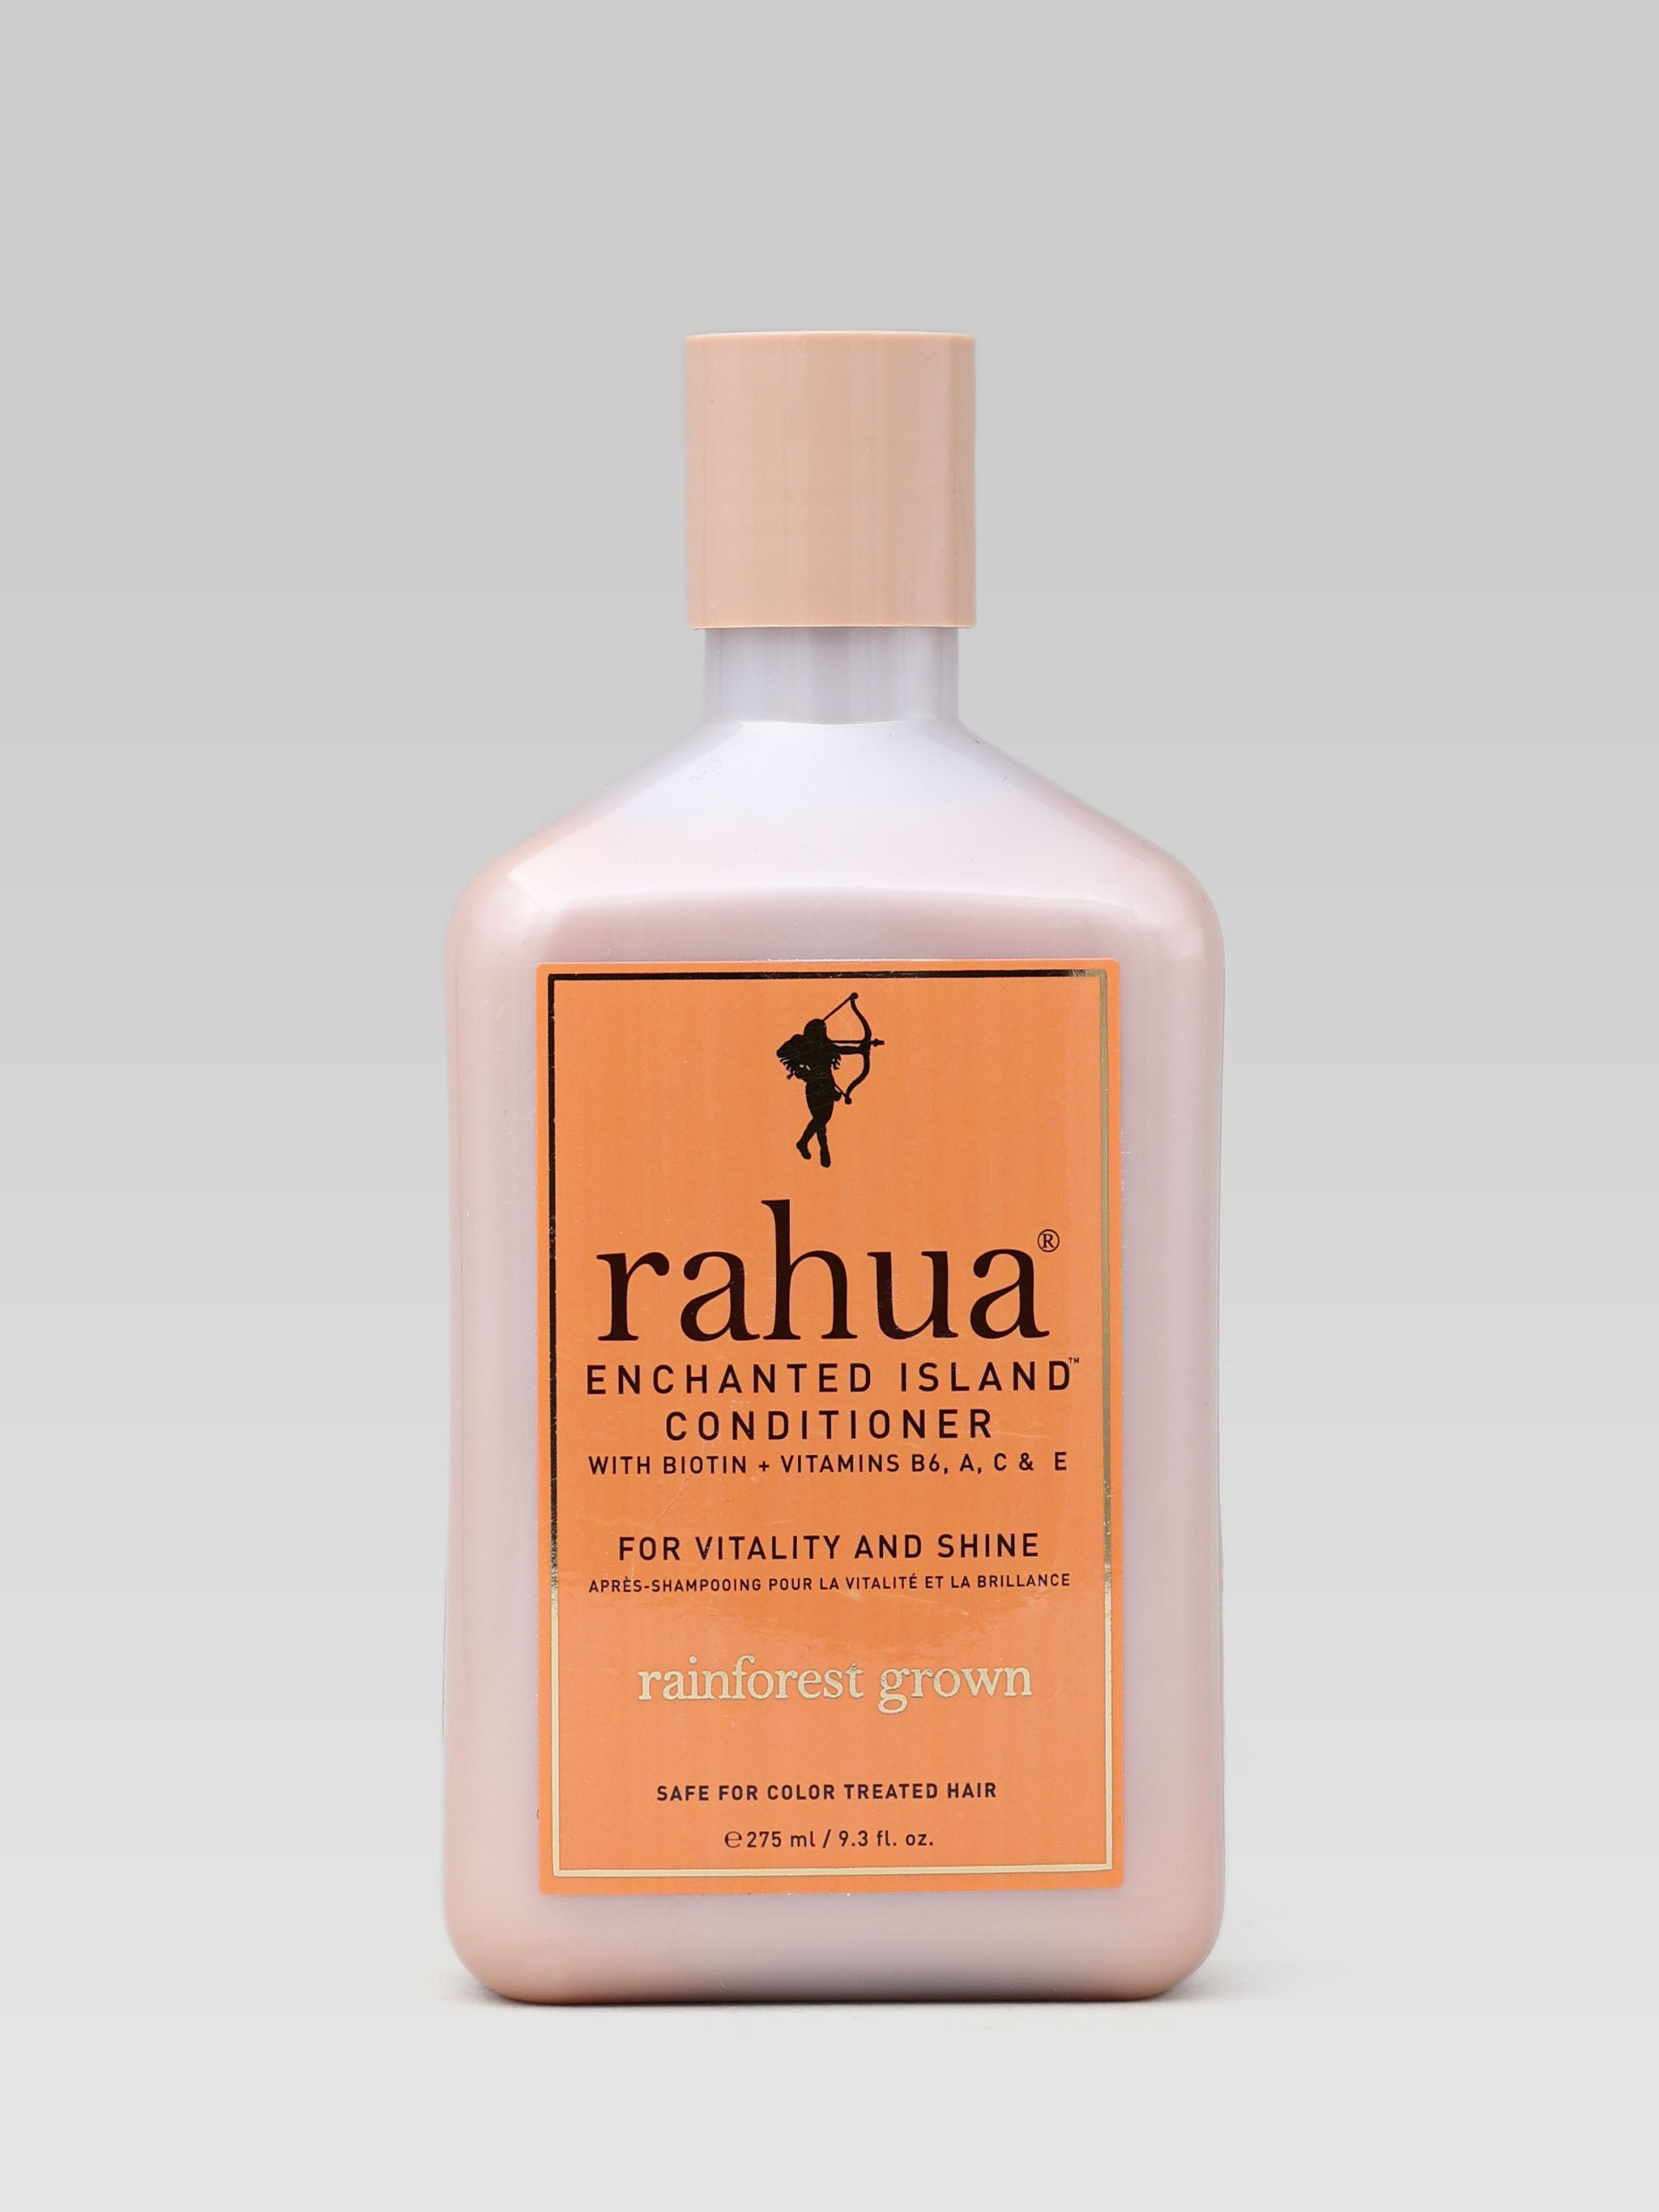 RAHUA Enchanted Island Conditioner product shot 